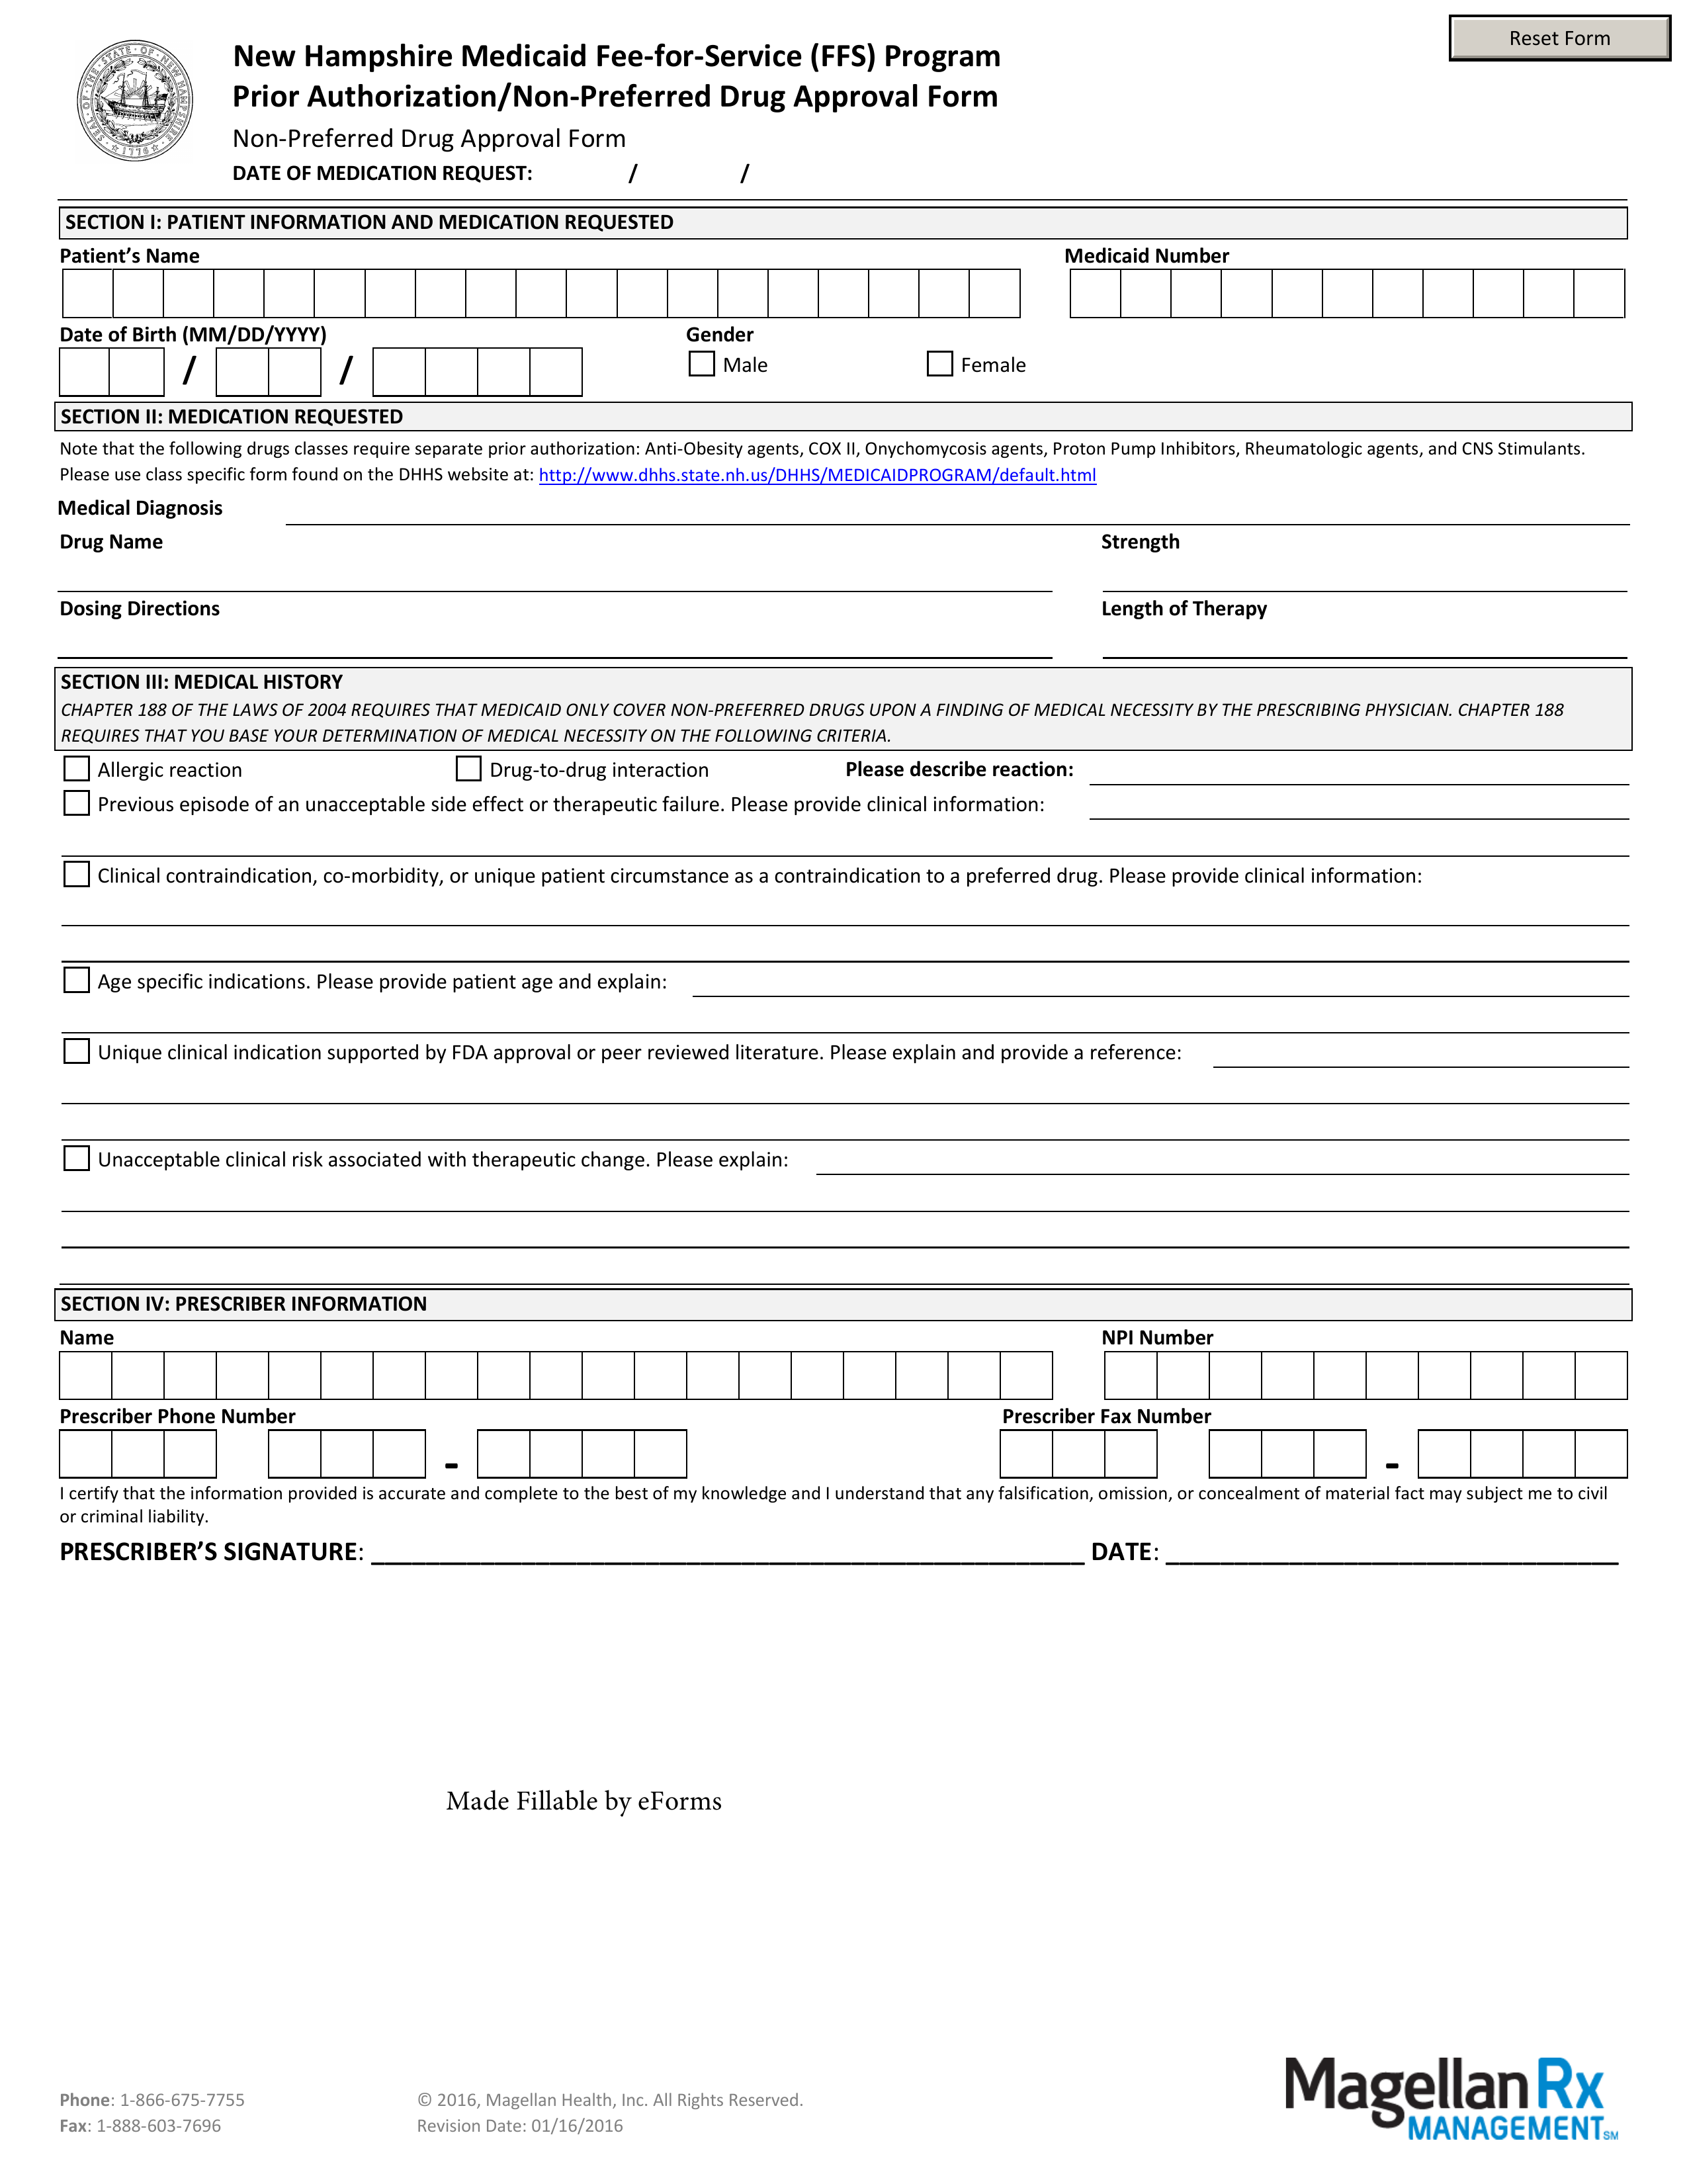 New Hampshire Medicaid Prior Authorization Form